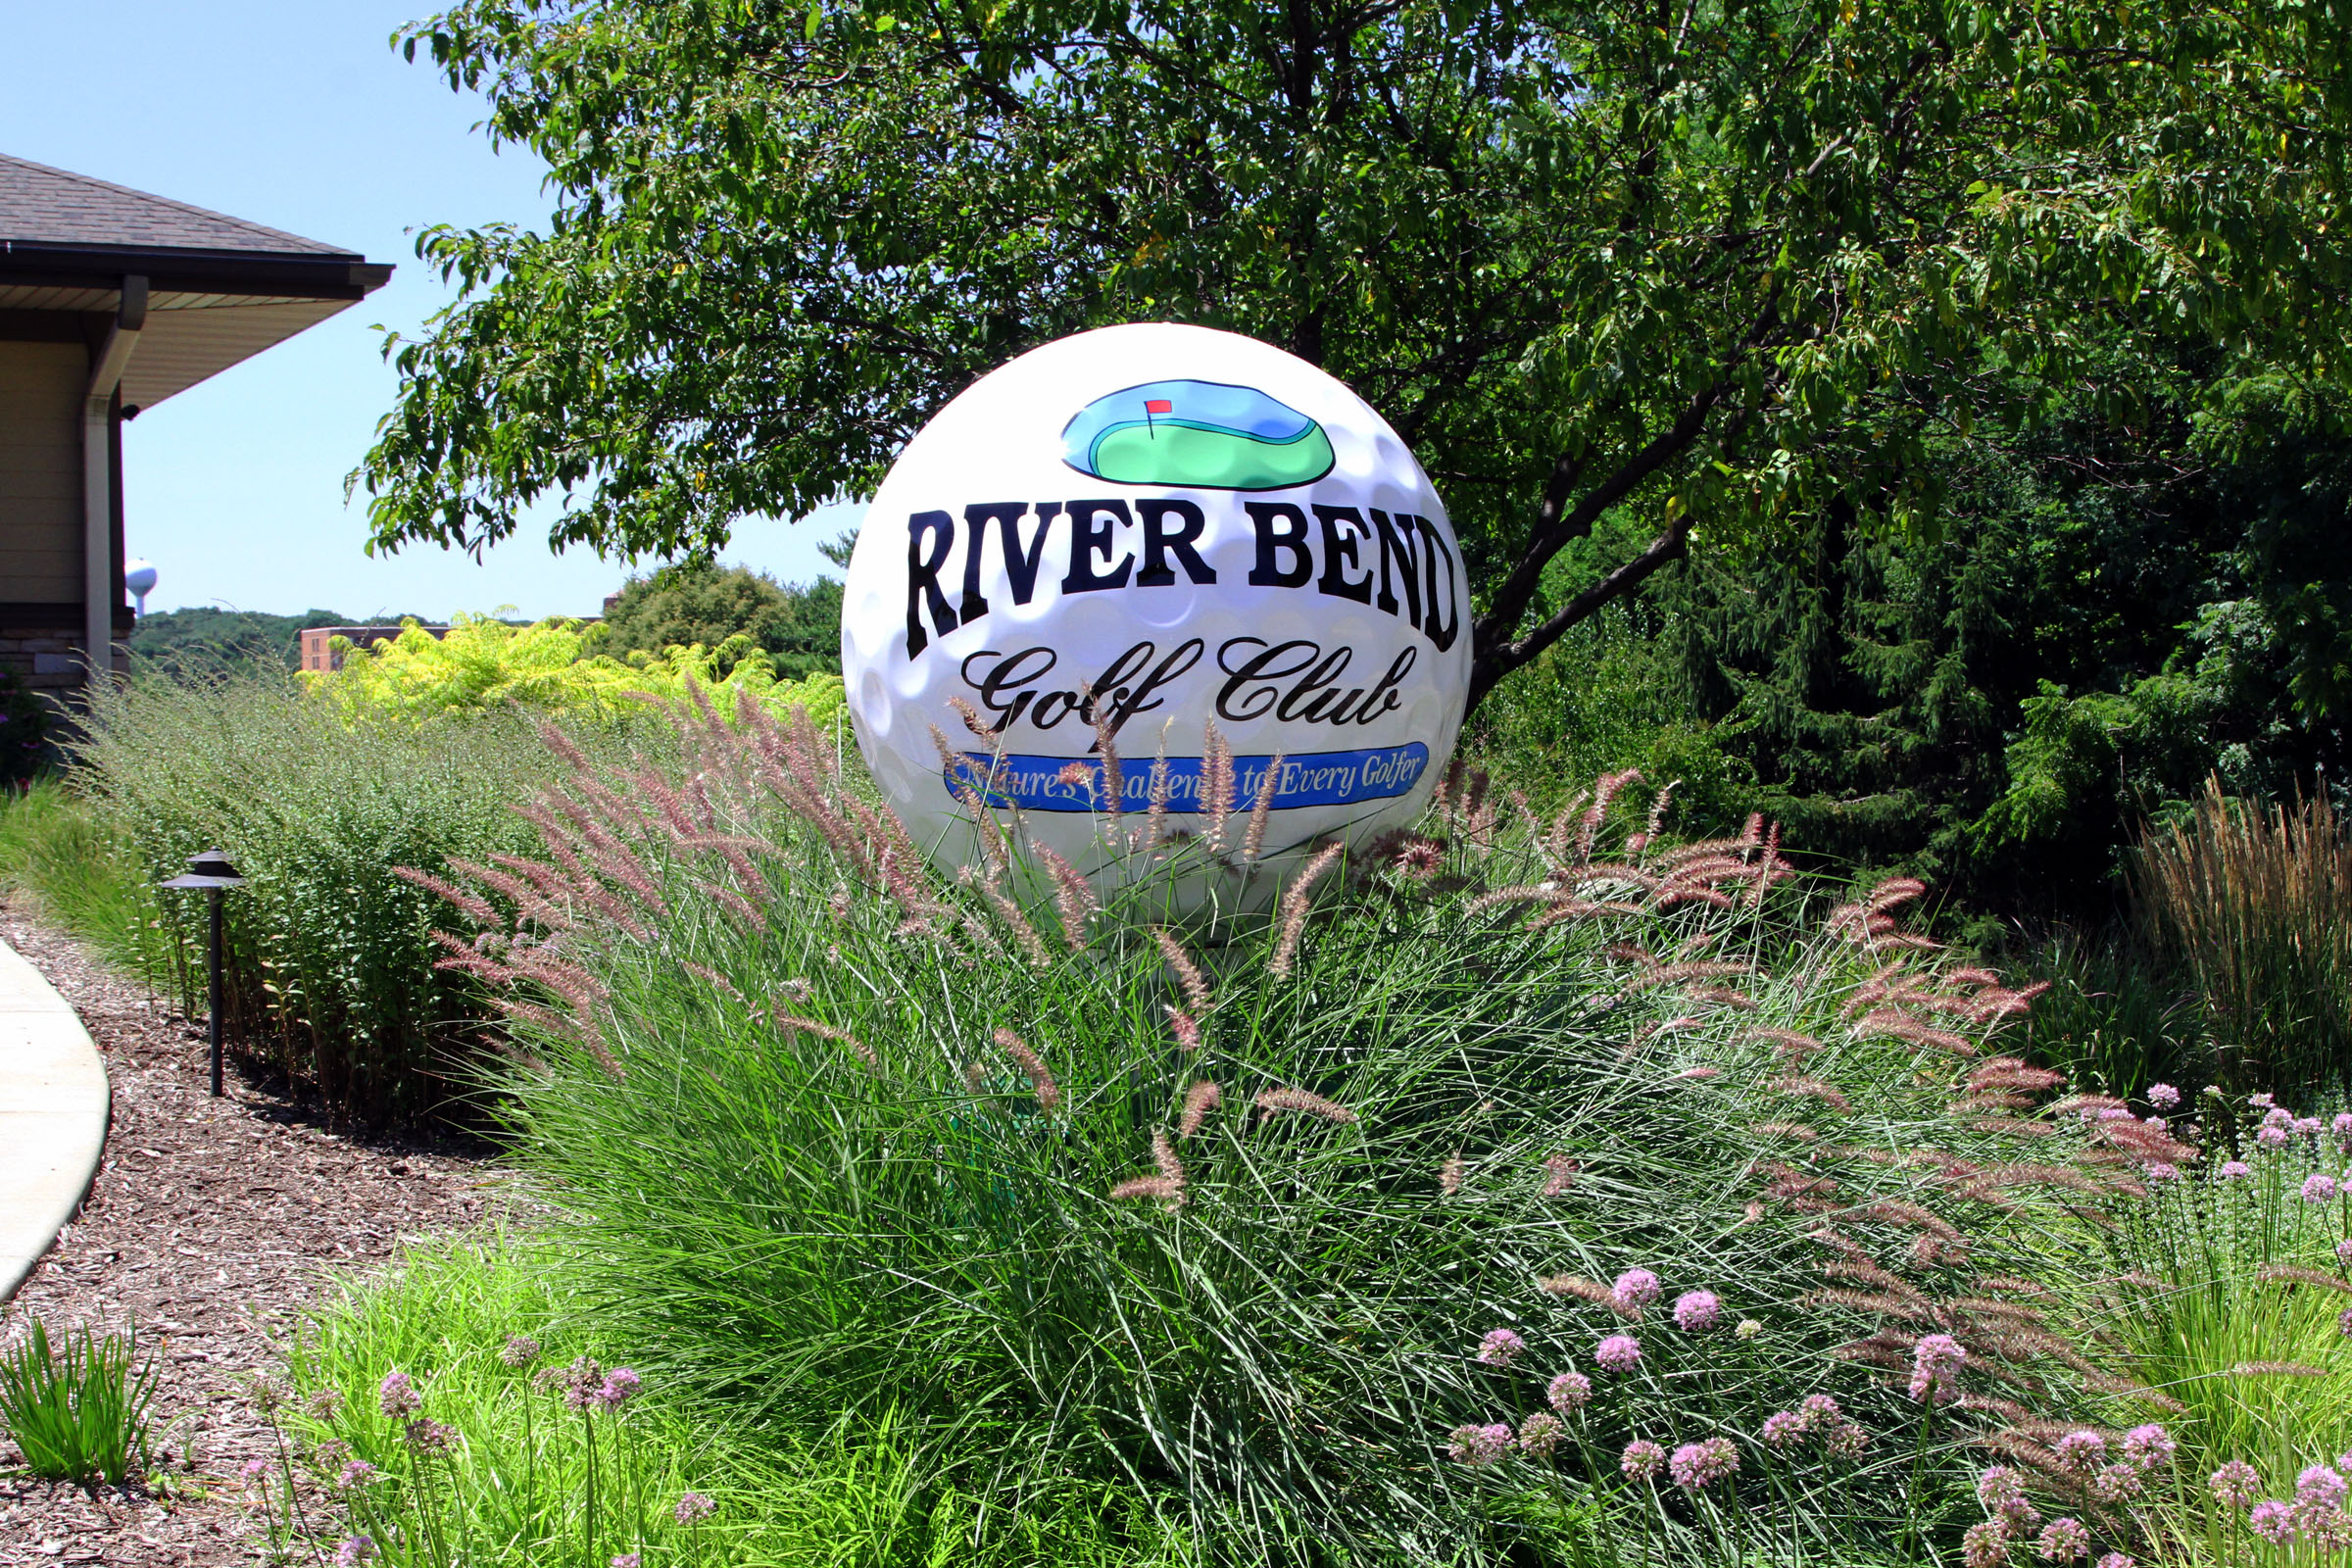 Giant River Bend Golf Ball